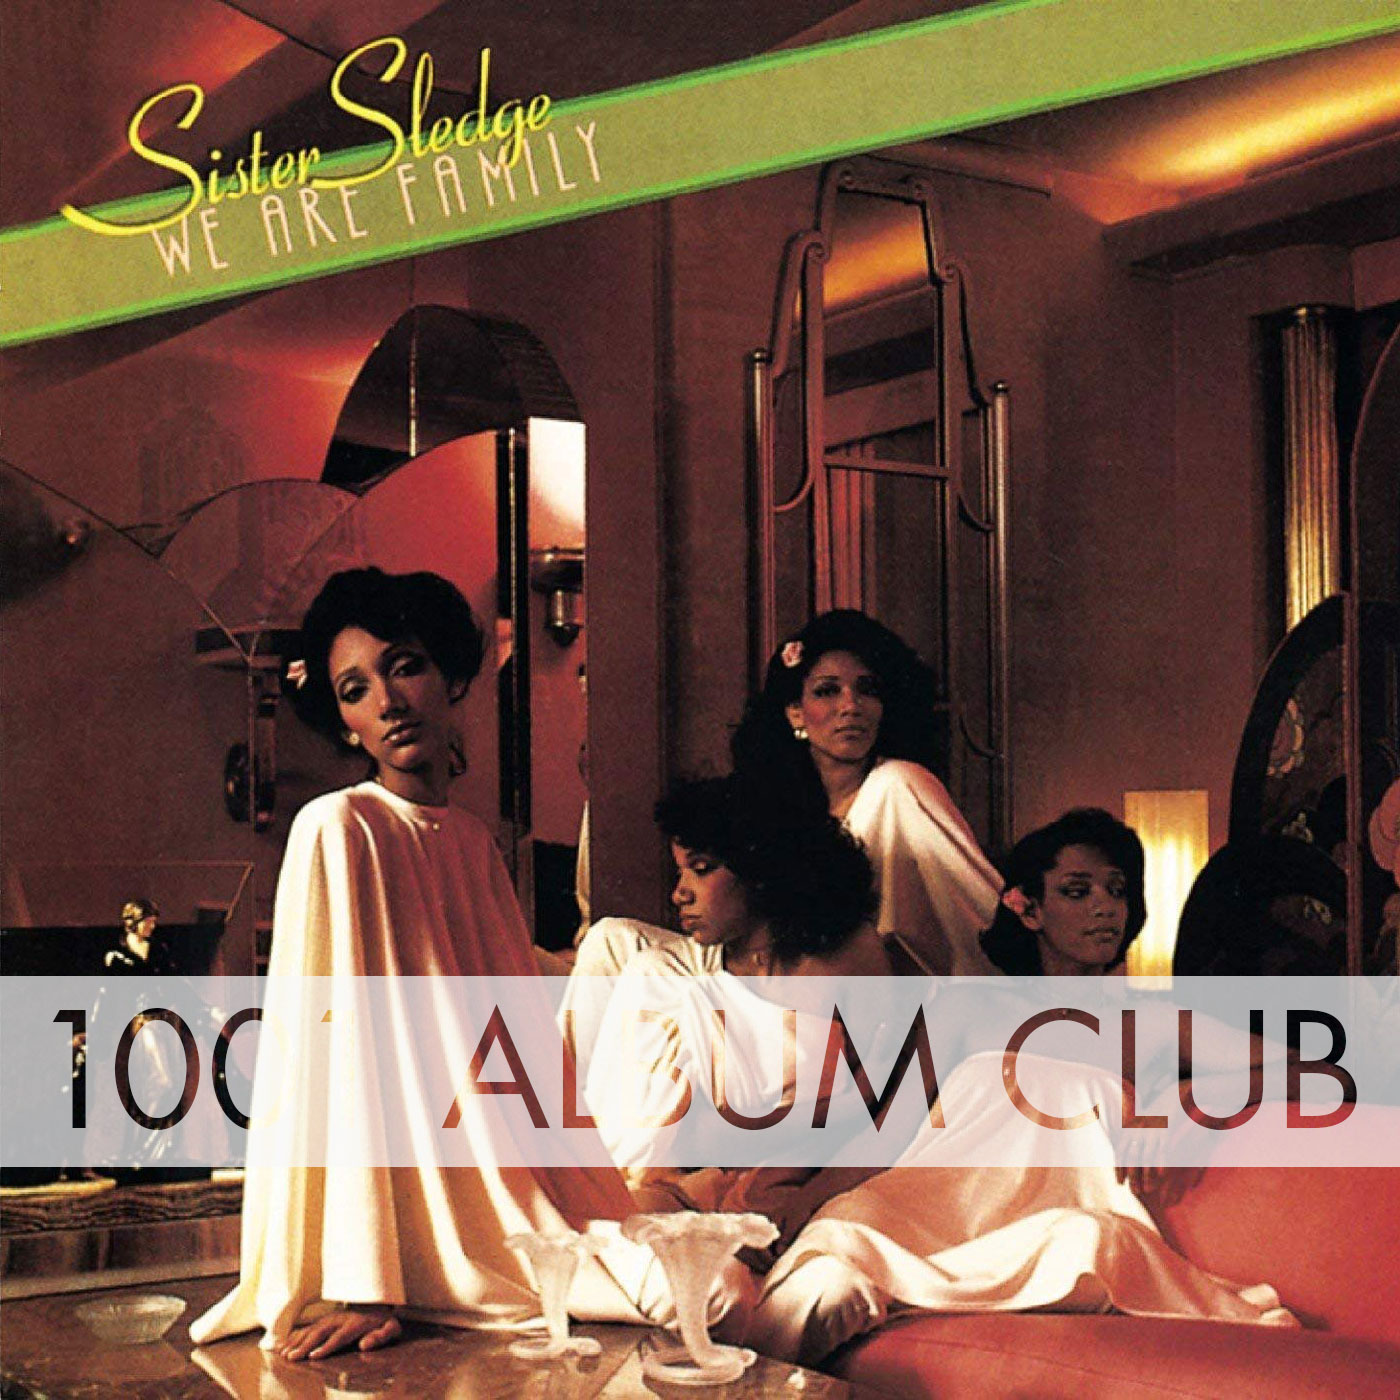 428 Sister Sledge – We Are Family – 1001 Album Club